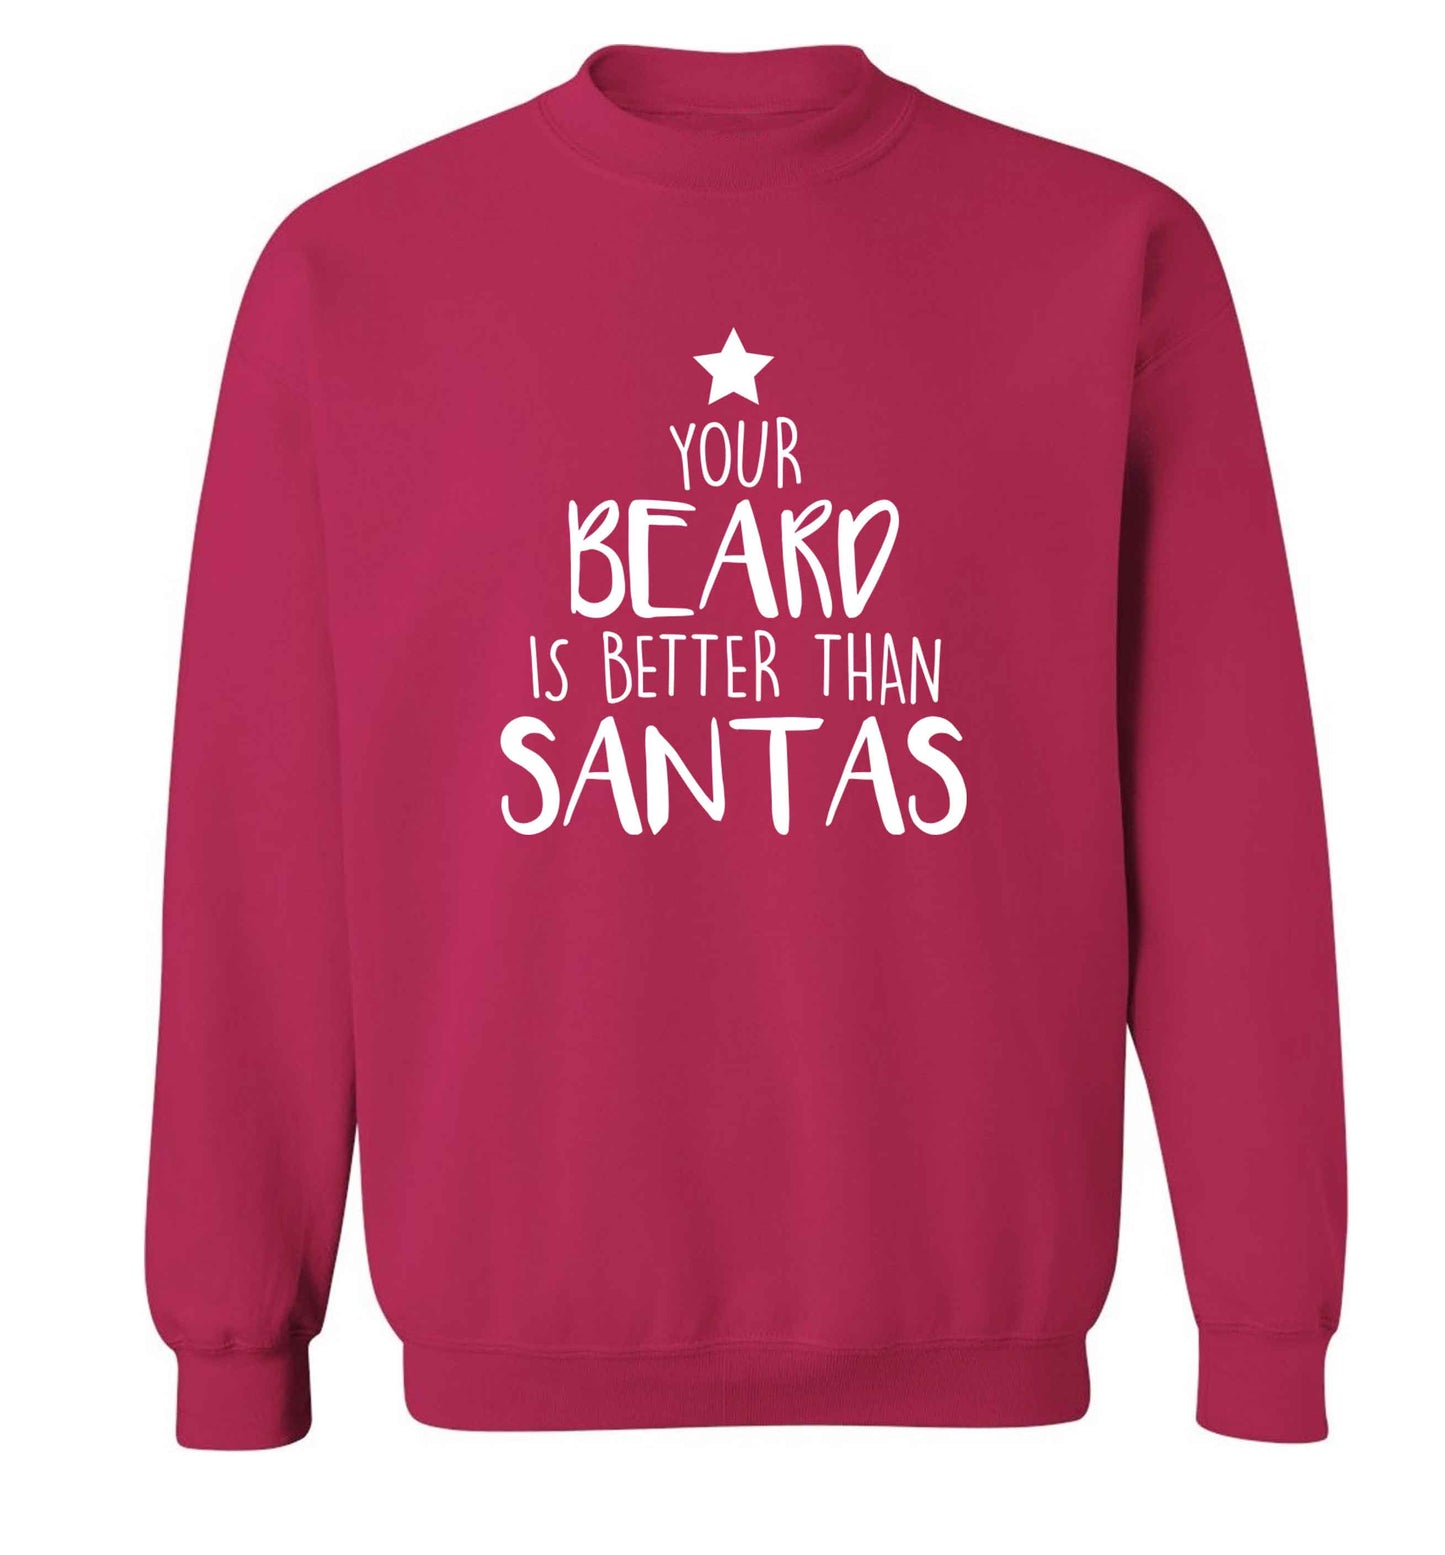 Your Beard Better than Santas adult's unisex pink sweater 2XL